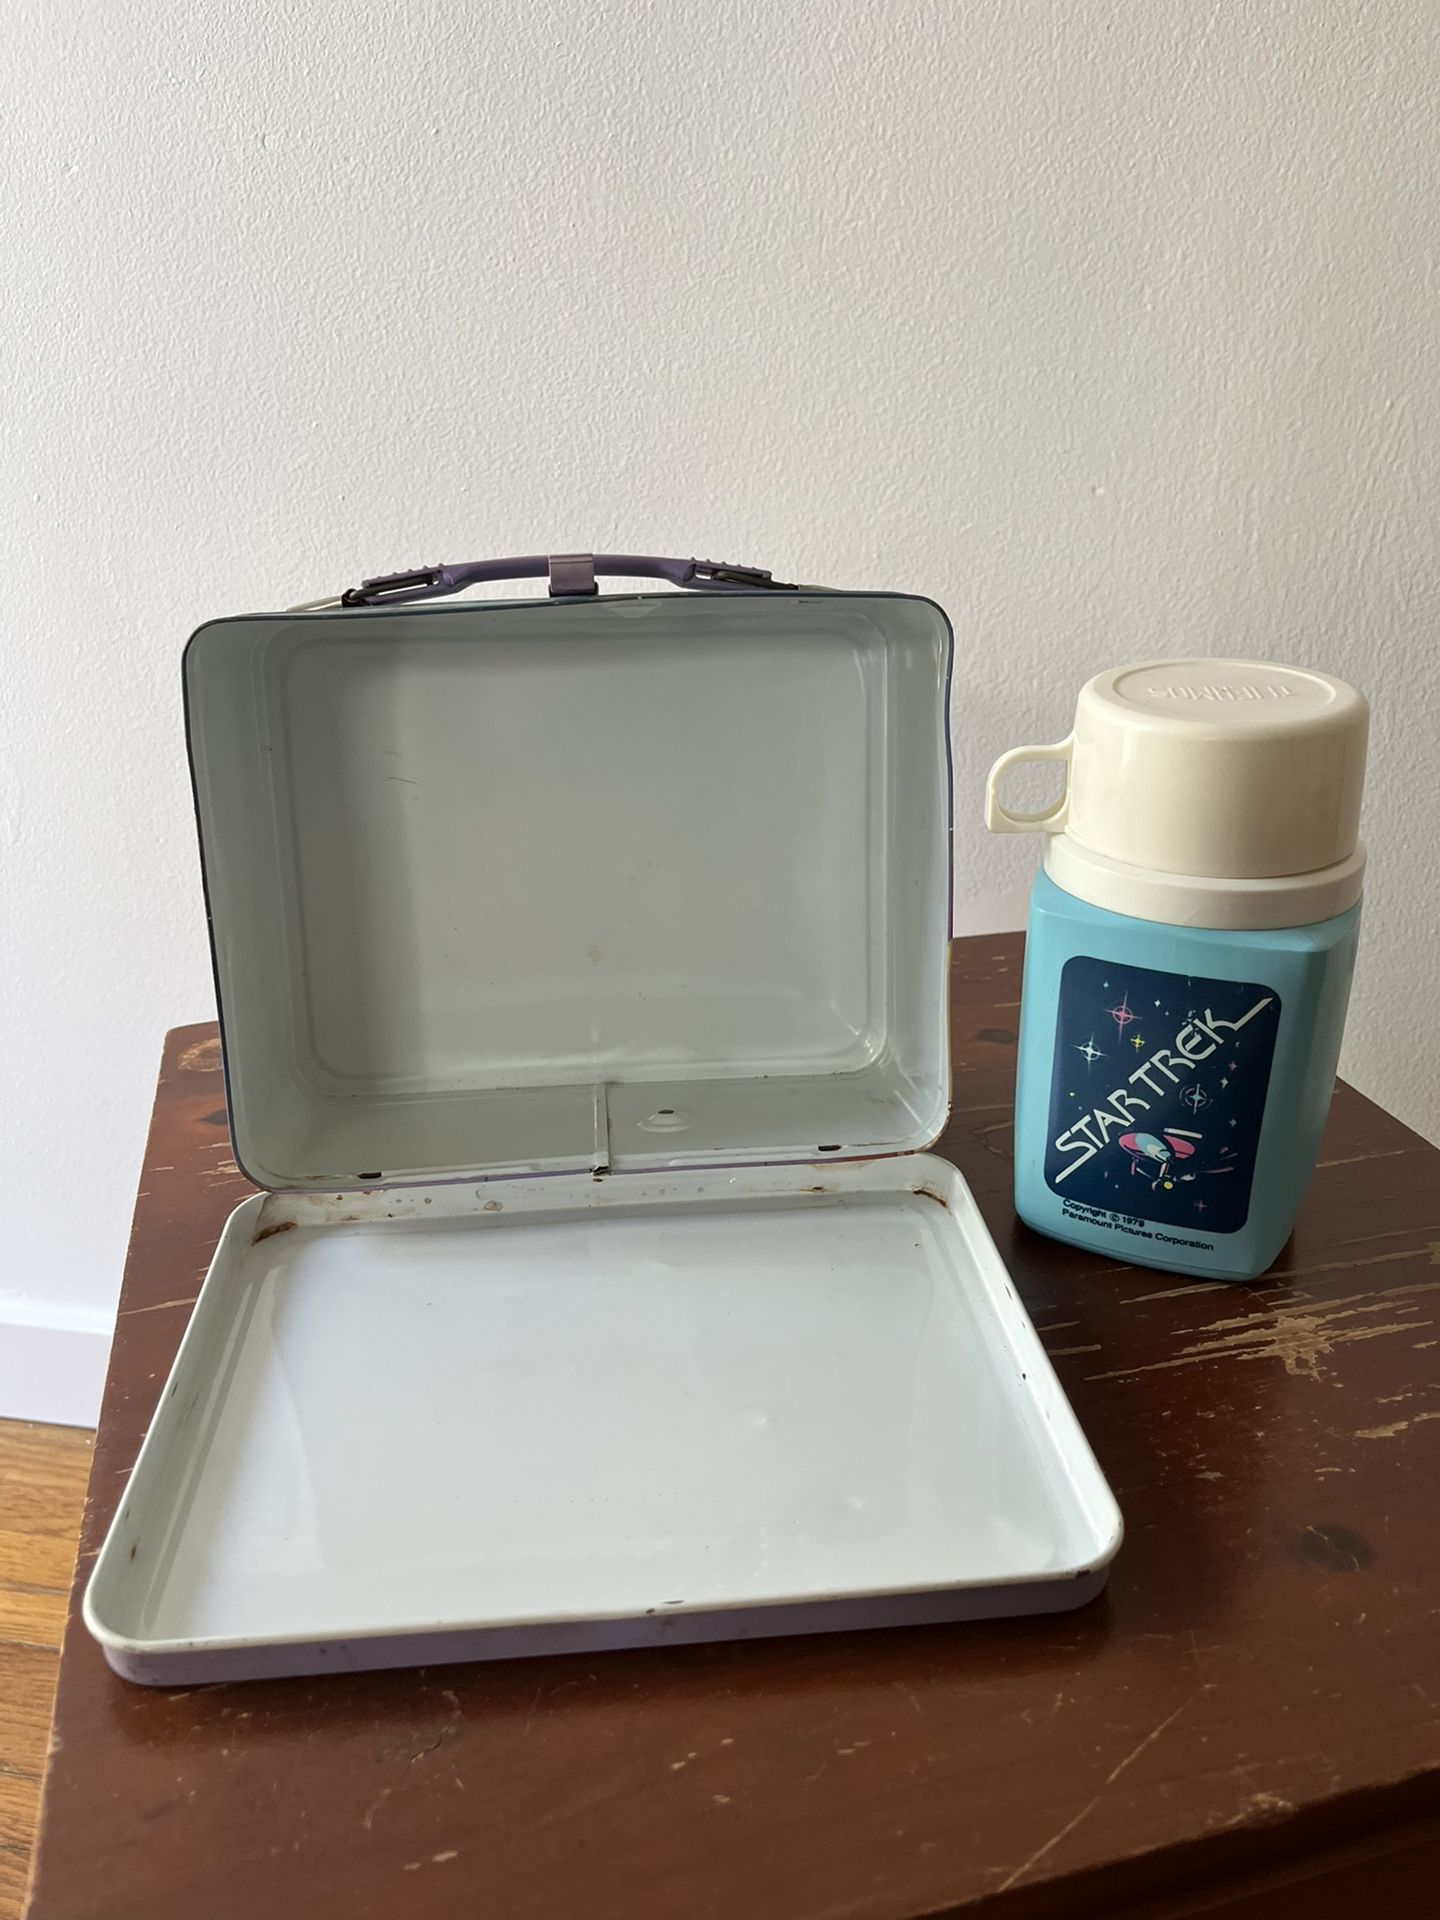 Retro Lunch Box + Thermos – Bobo's